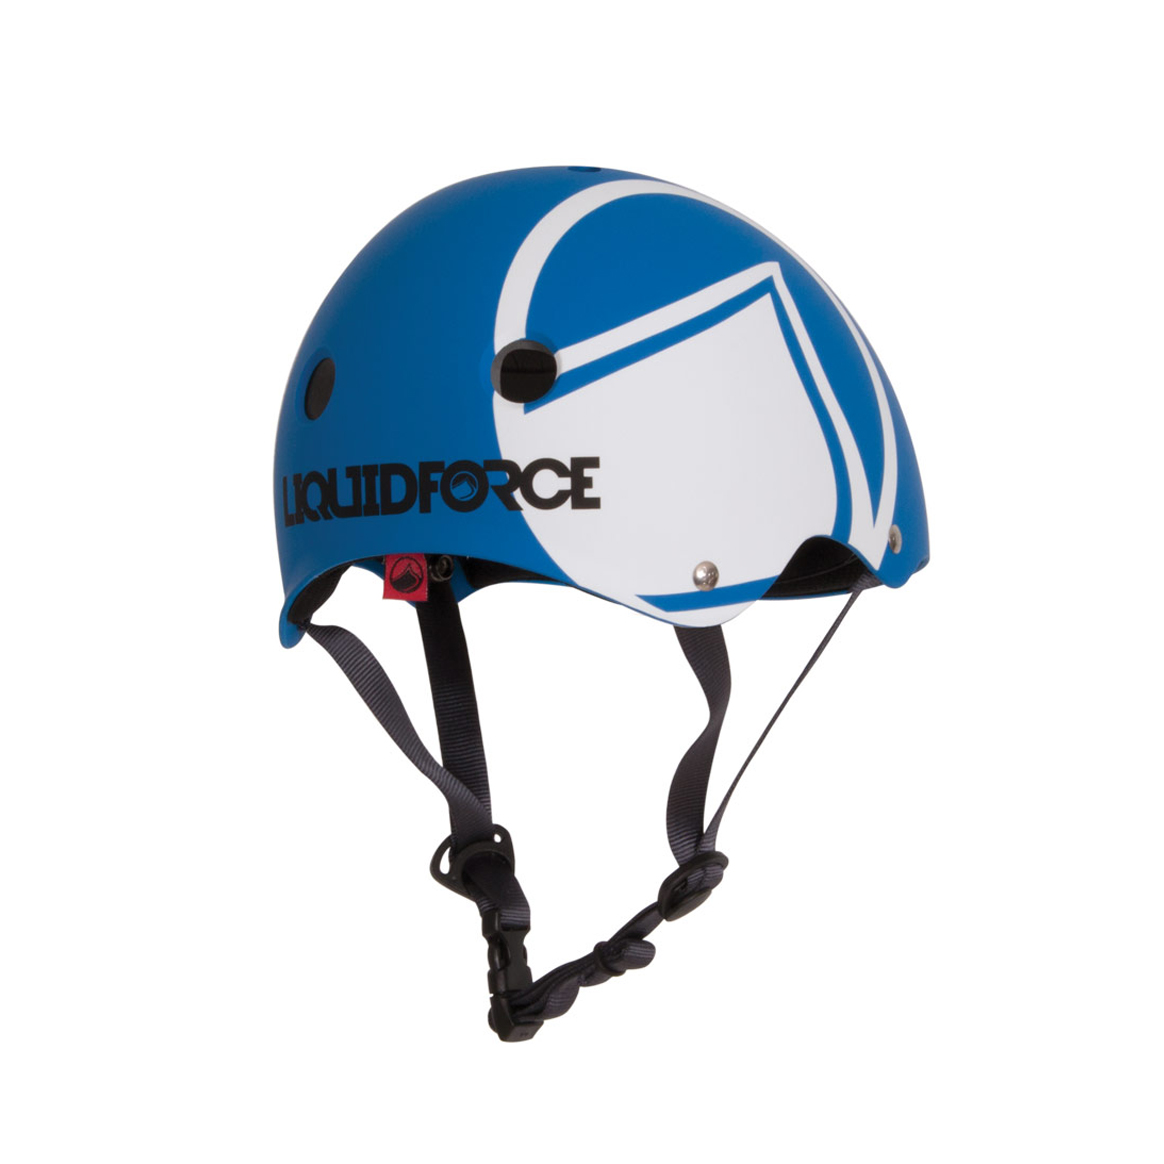 Liquid Force Hero helmet – blue